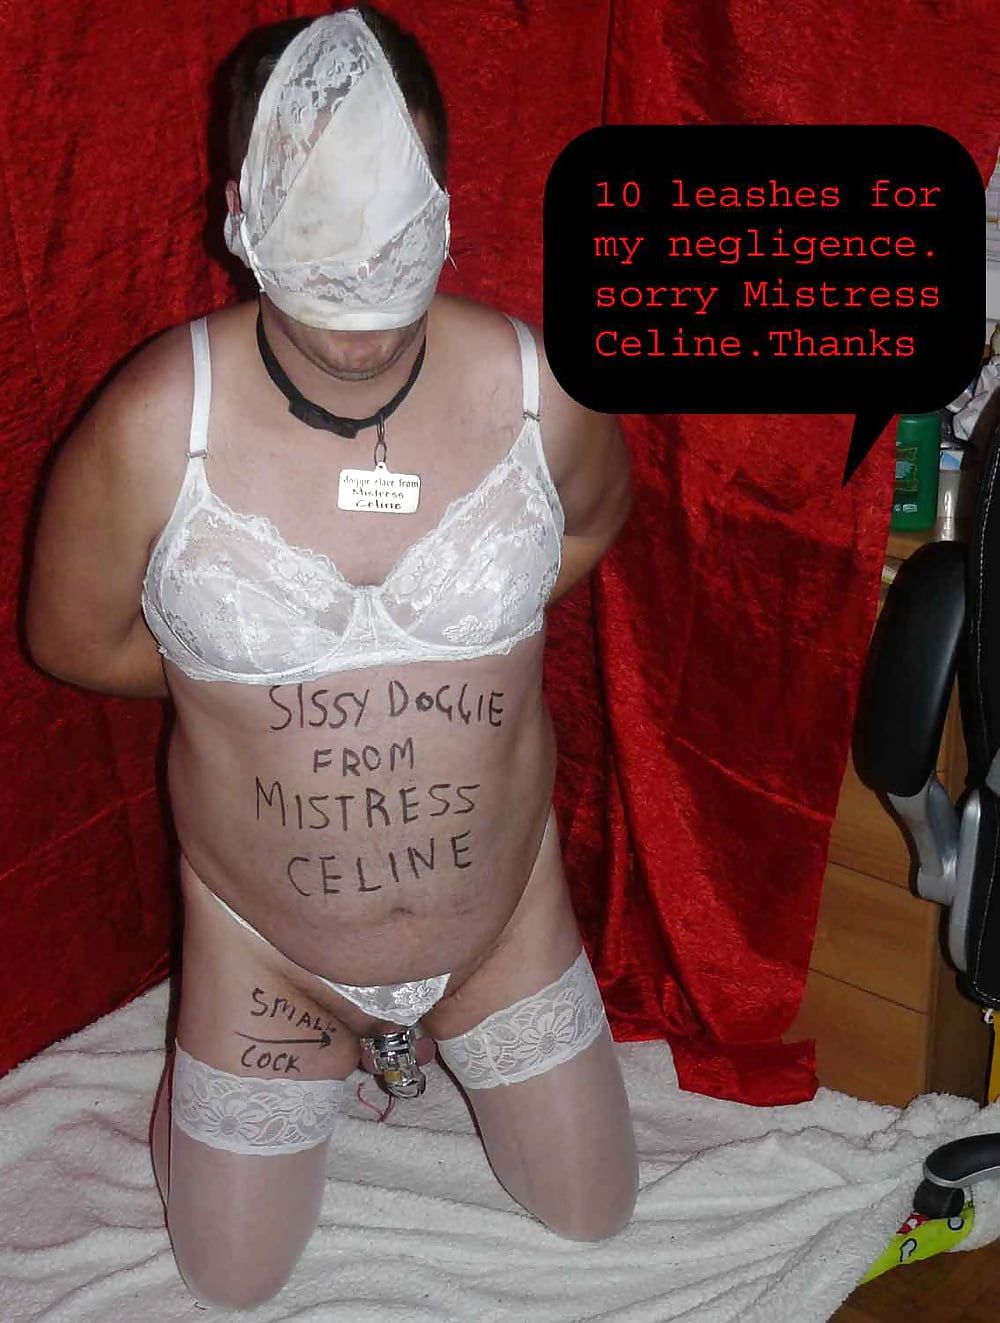 punished for my negligence. Thanks Mistress Celine